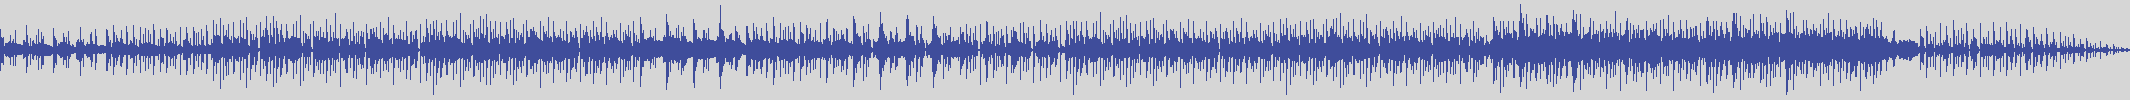 noclouds_chillout [NOC148] Socrates - First Level [Santorini Beach Mix] audio wave form